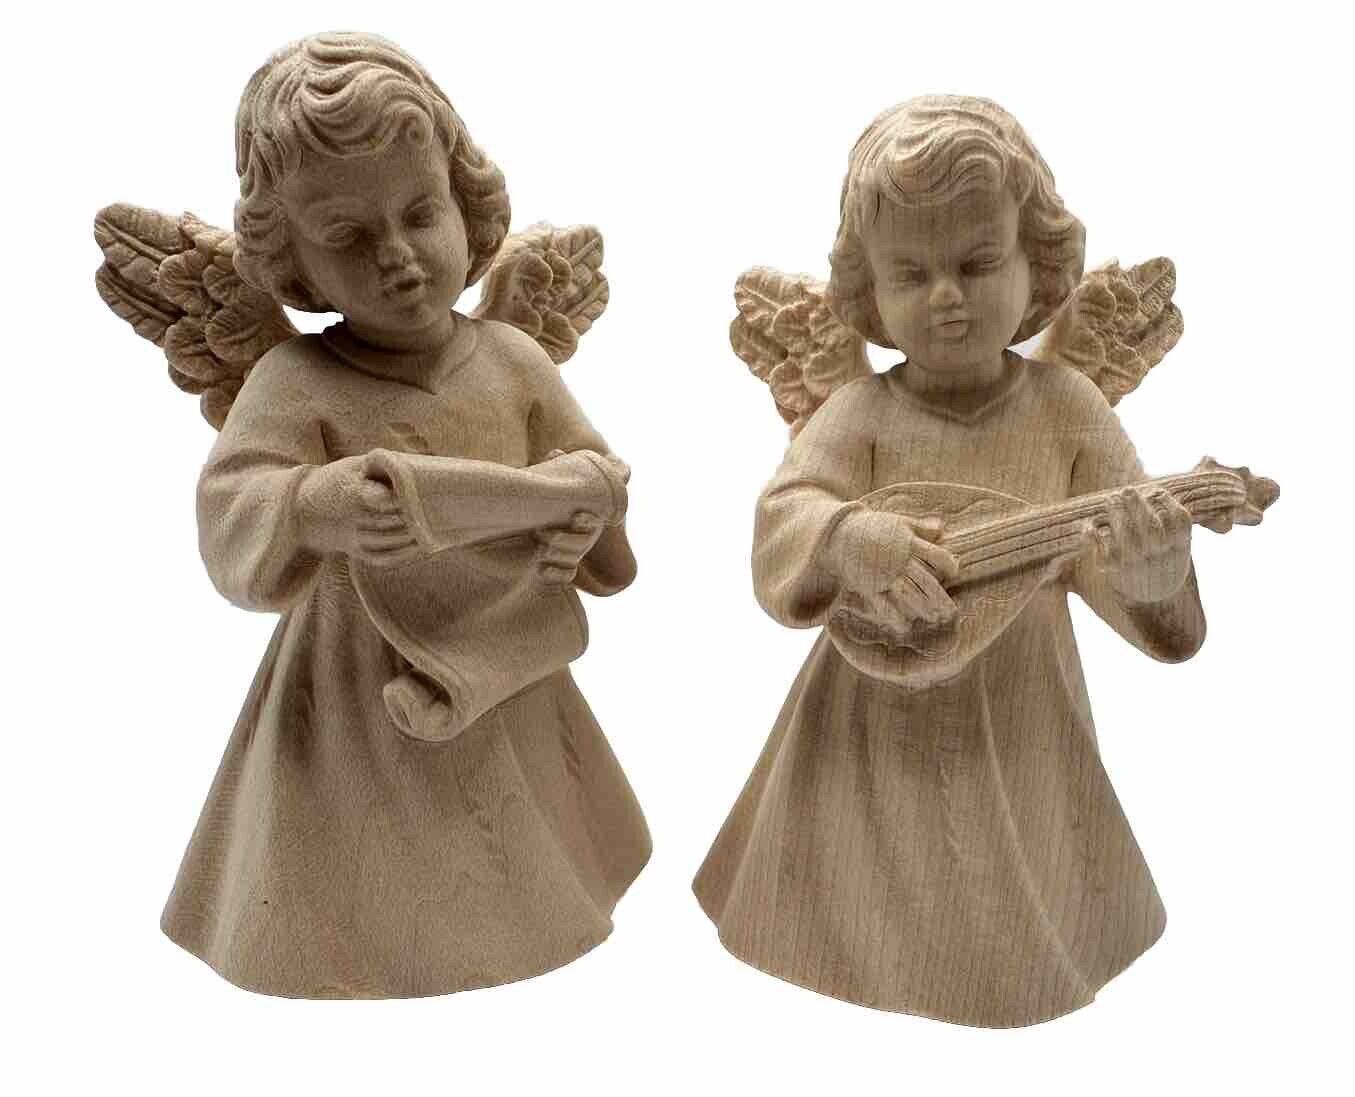 Hand Carved Wooden Angel Figurines Carved in Bethlehem VTG Unique Christmas